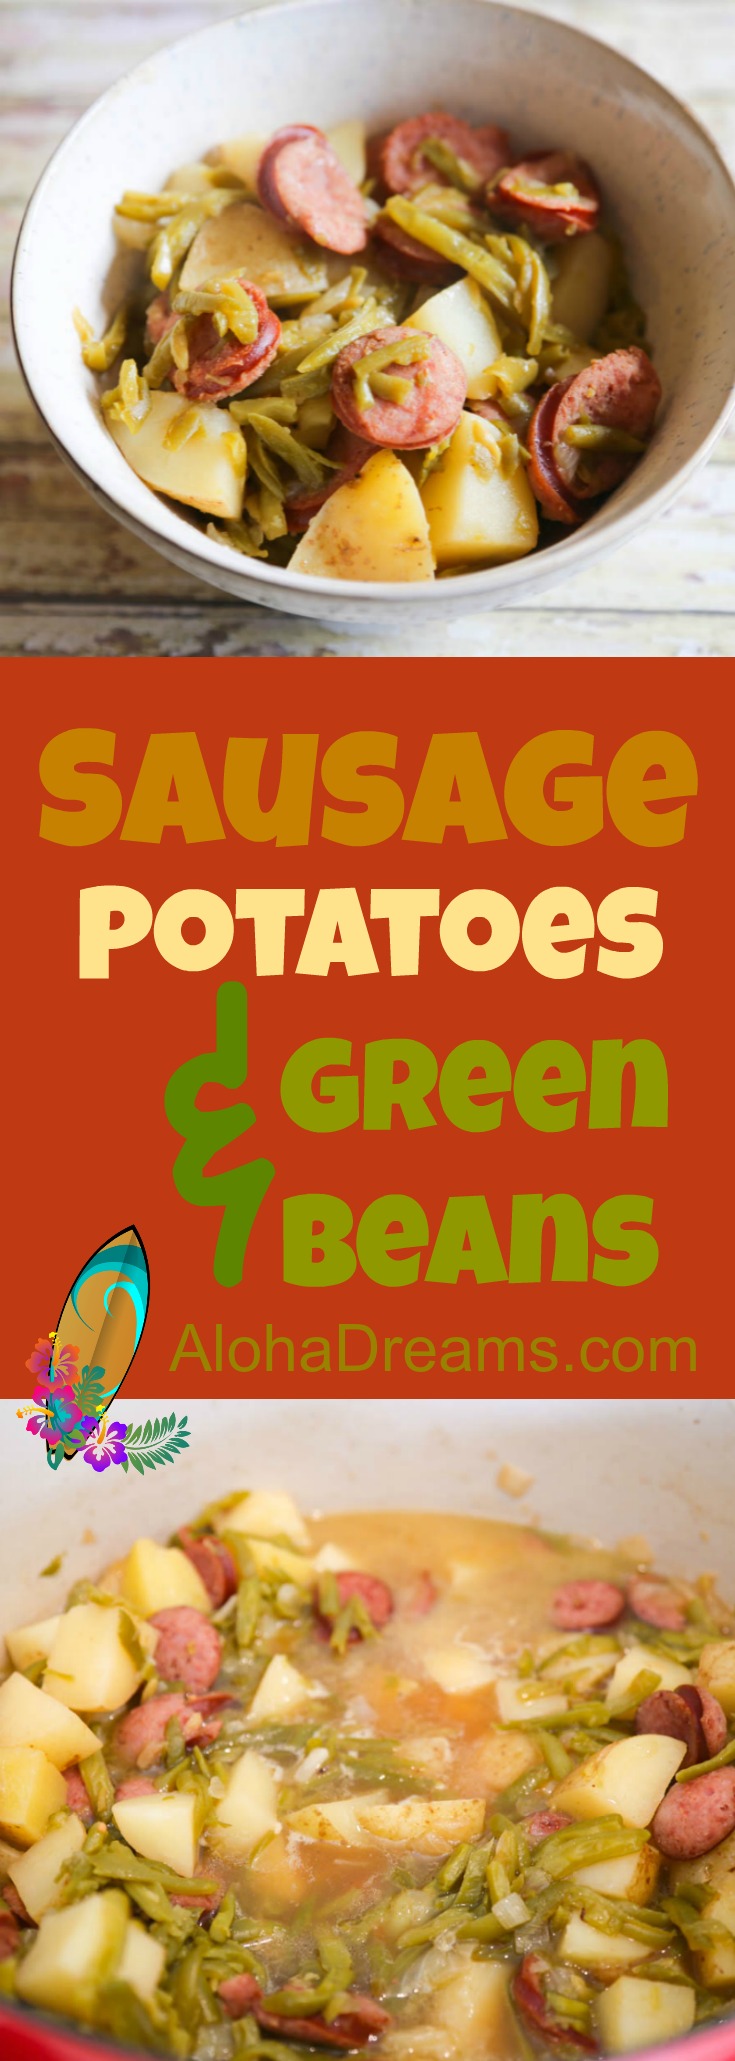 sausage potatoes green beans